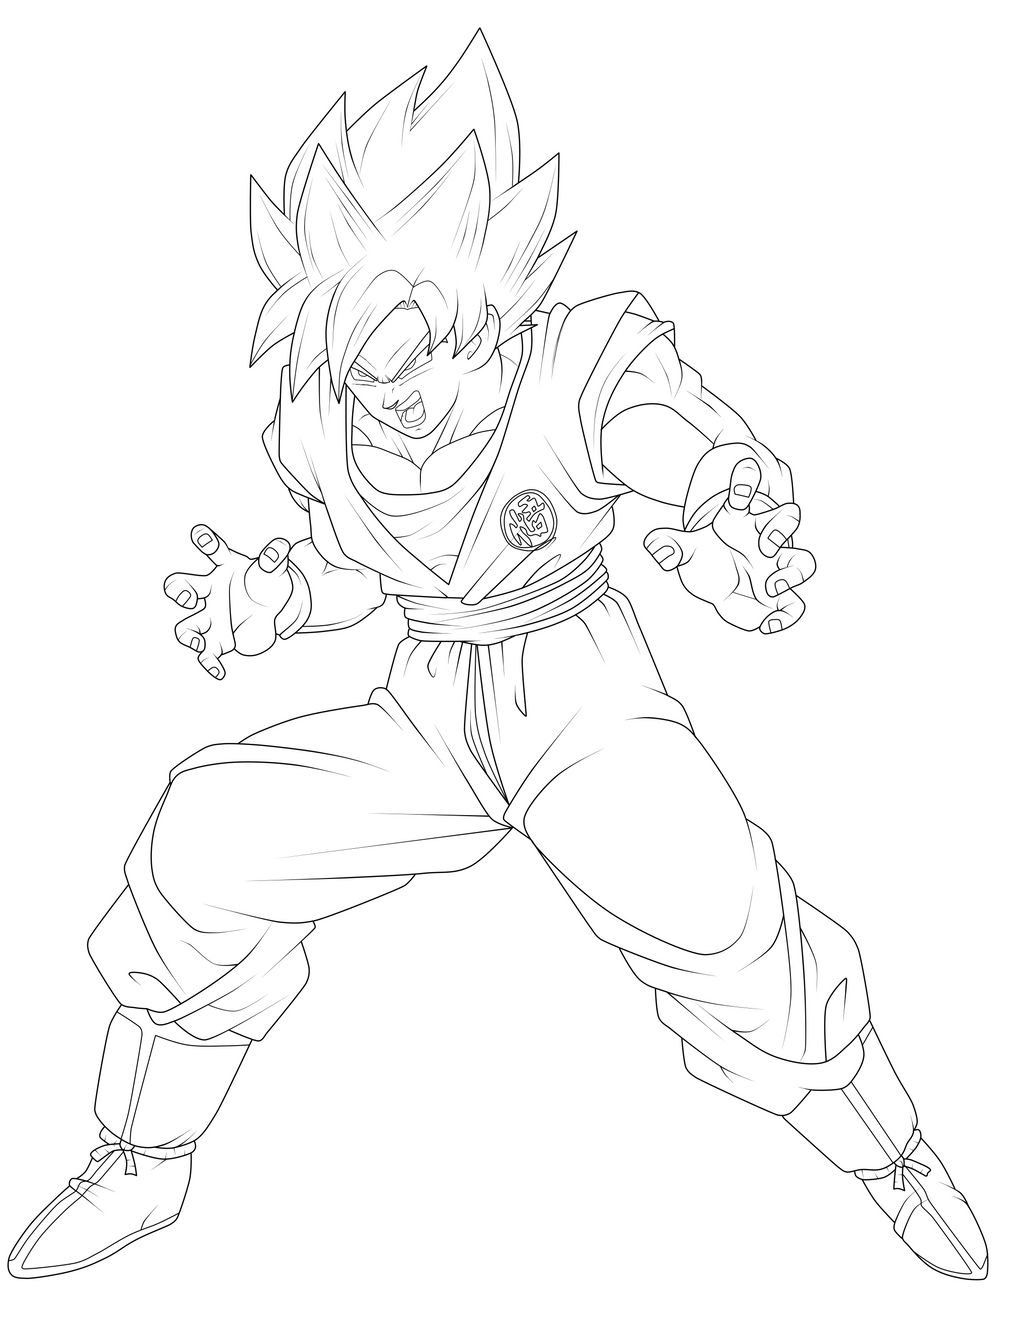 Goku Black #2 (Line-Art) by AubreiPrince on DeviantArt